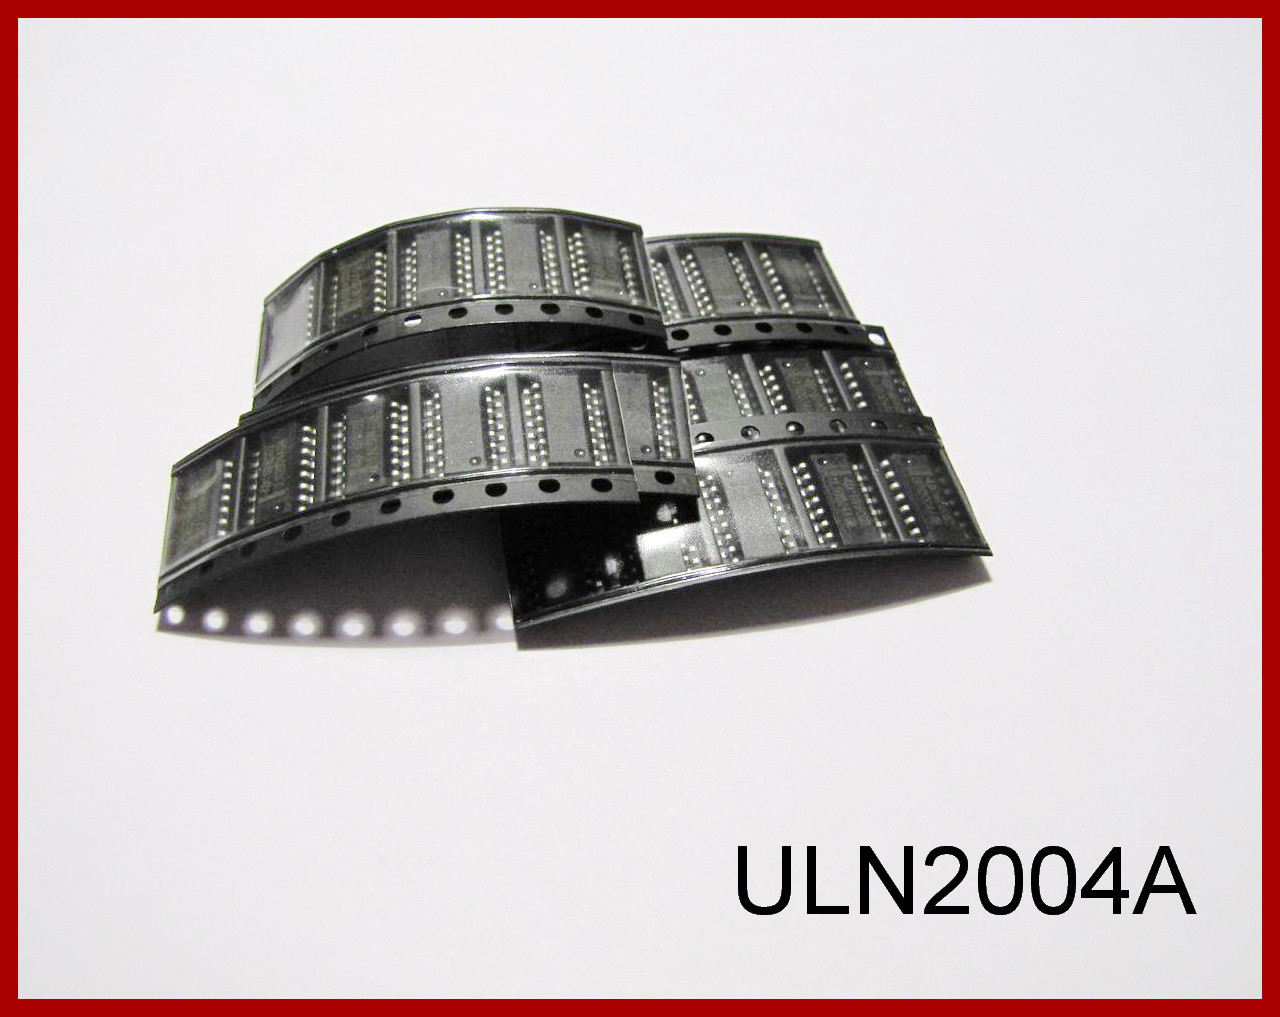 ULN2004A, транзисторна збірка Дарлінгтона.